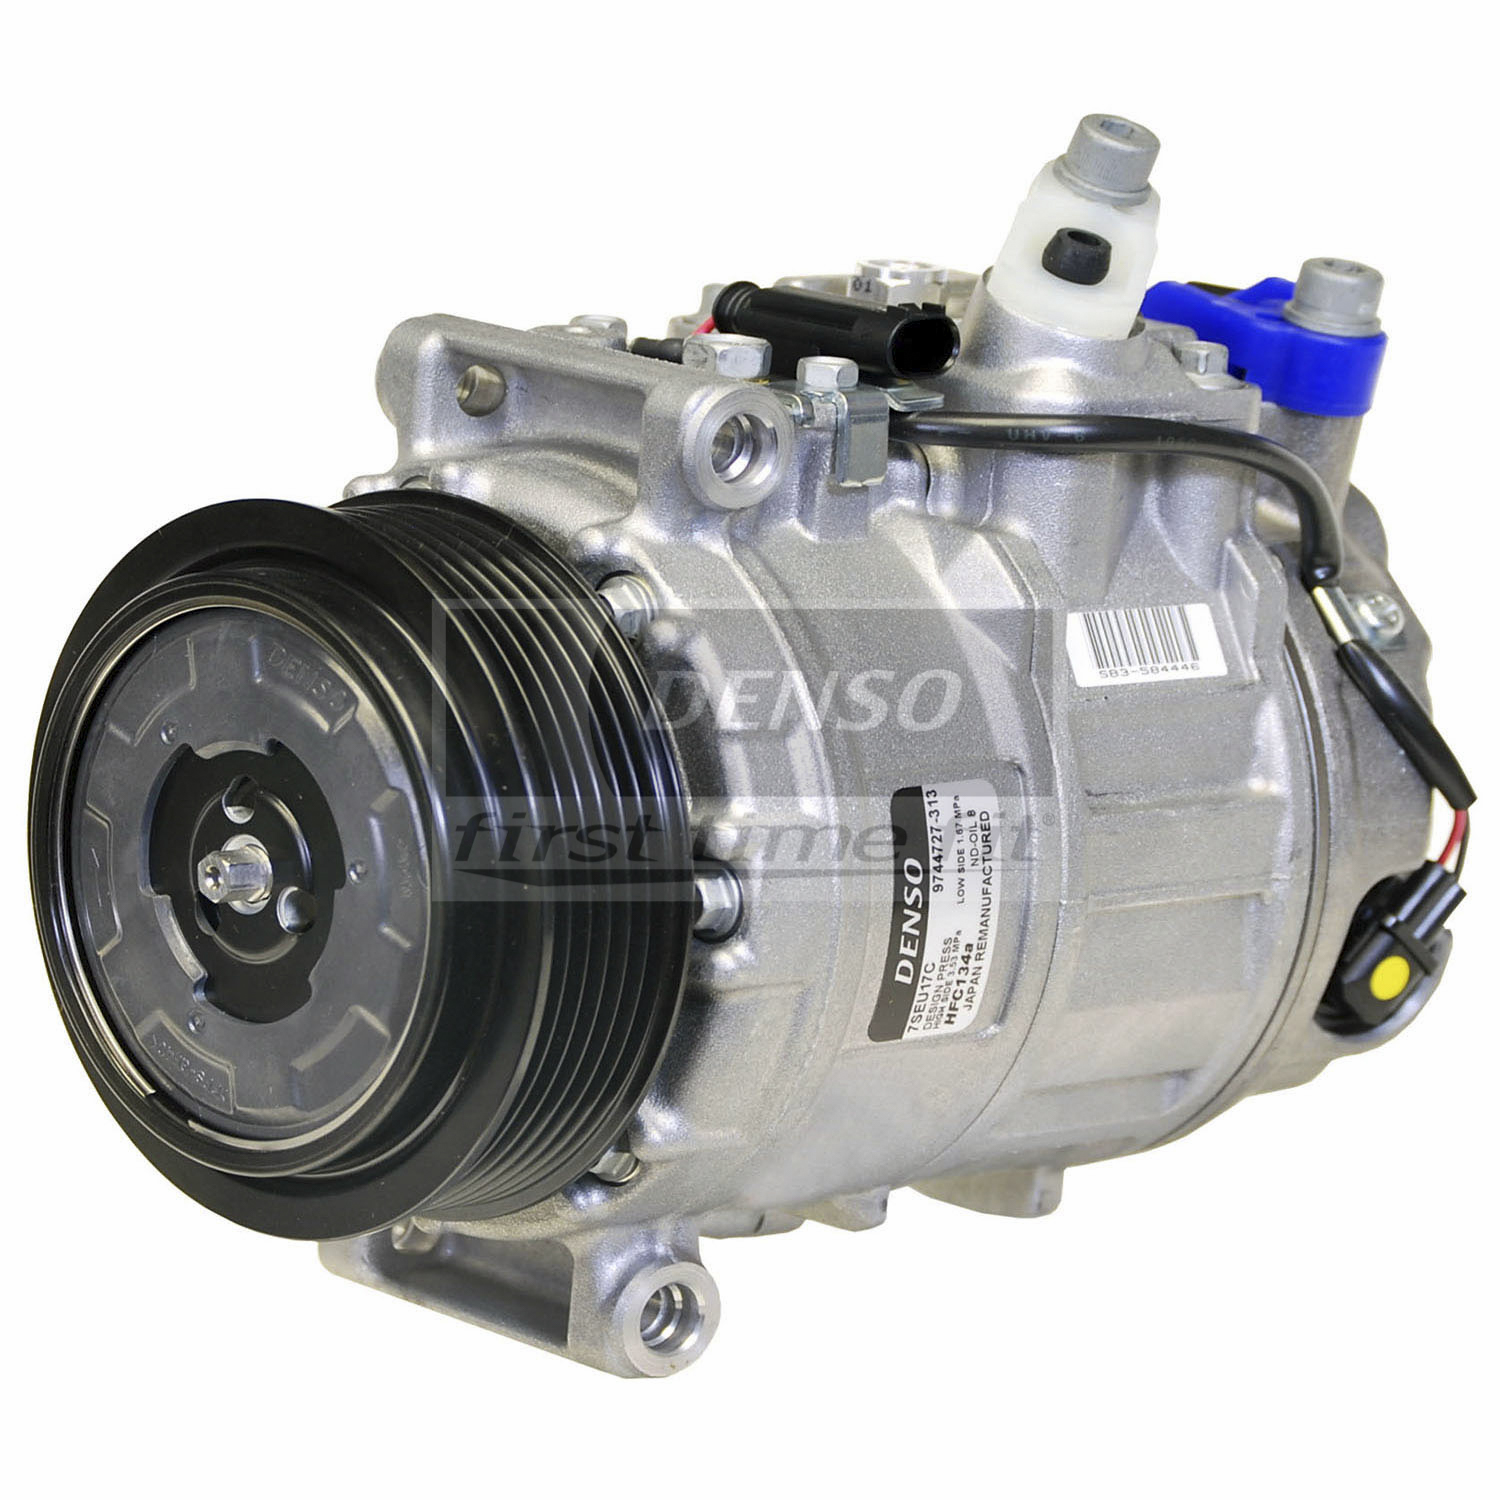 TCW Platinum Compressor 31730.601NIP New Product Image field_60b6a13a6e67c